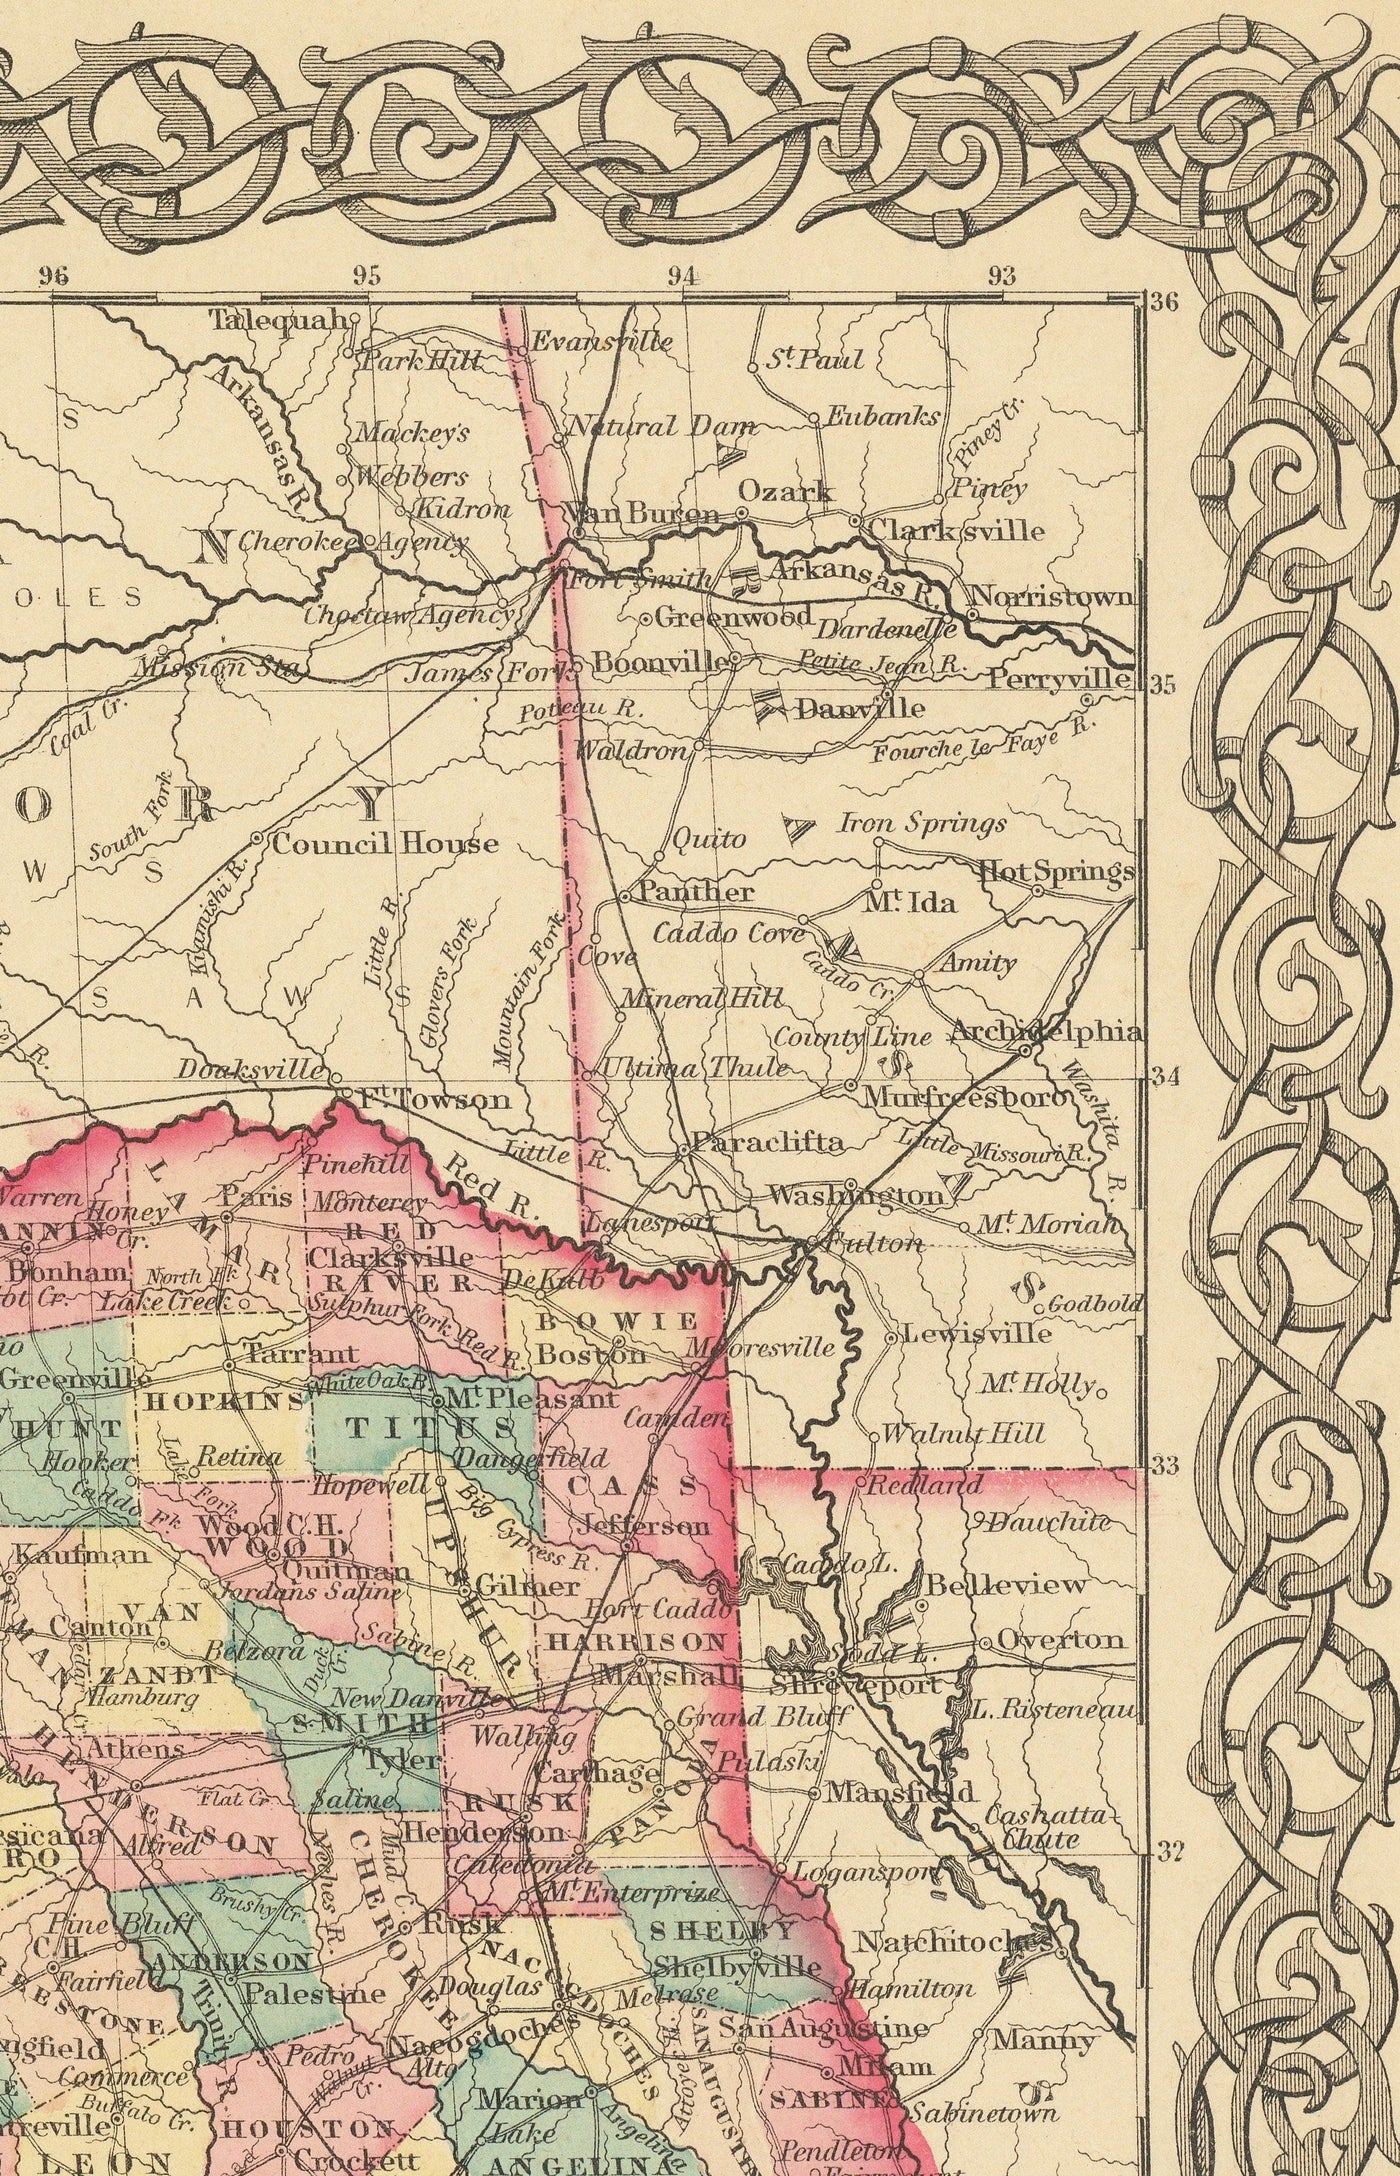 Ancienne carte du Texas 1856 par Colton - Houston, San Antonio, Dallas, Austin, Fort Worth, El Paso